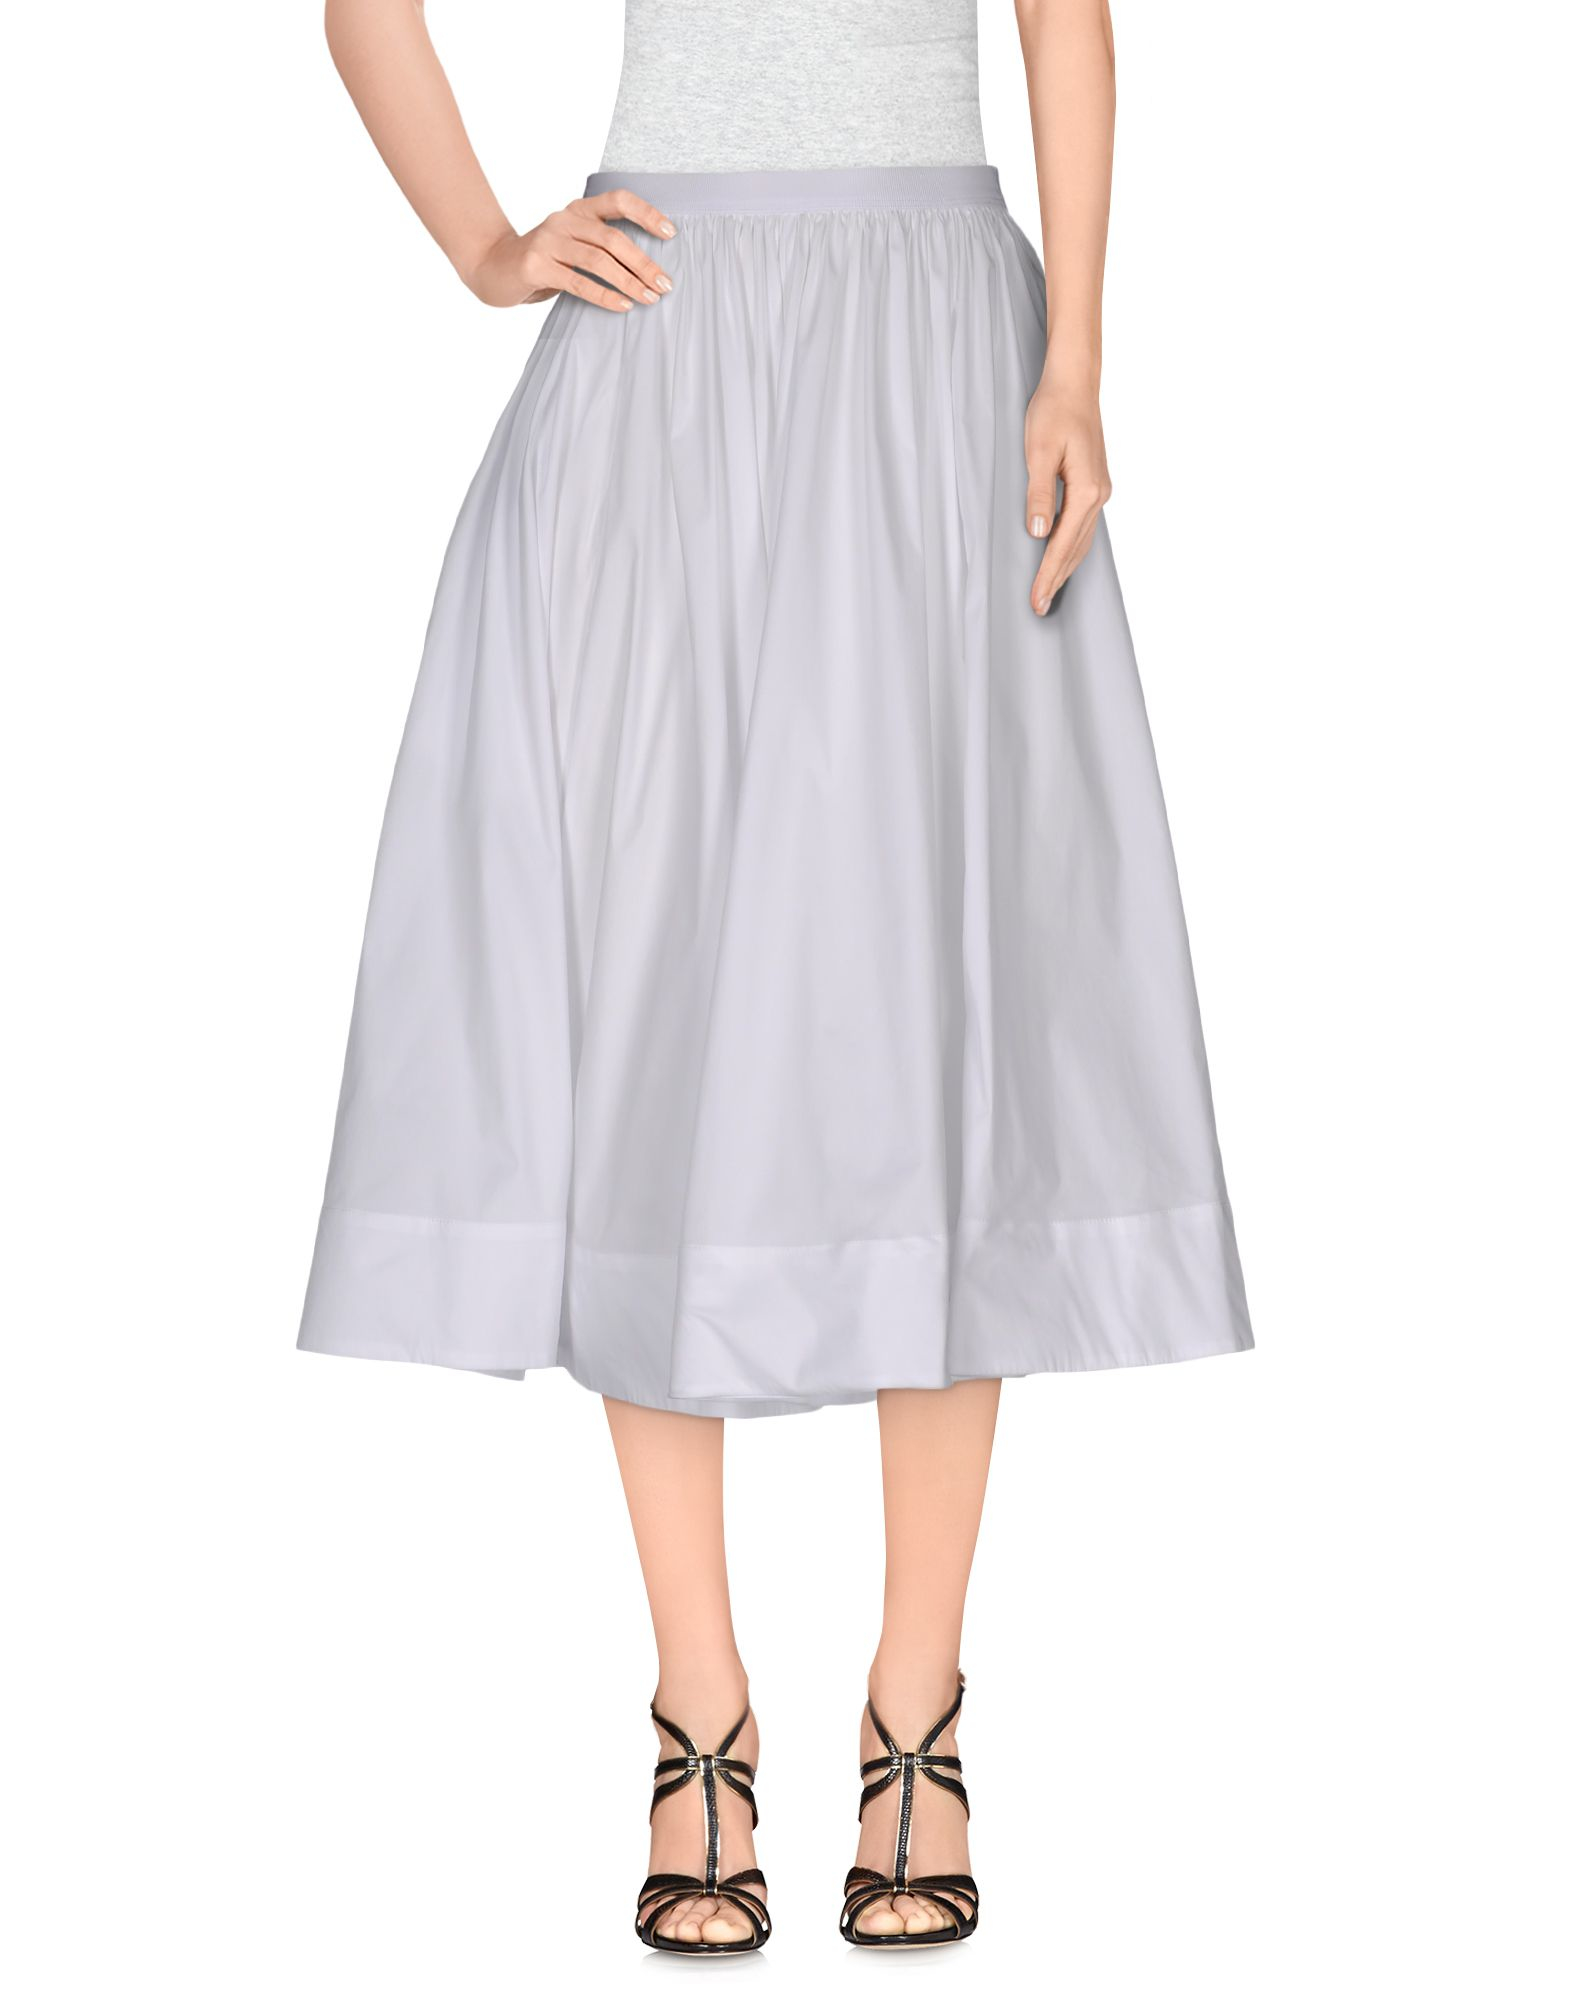 Twin set 3/4 Length Skirt in White | Lyst